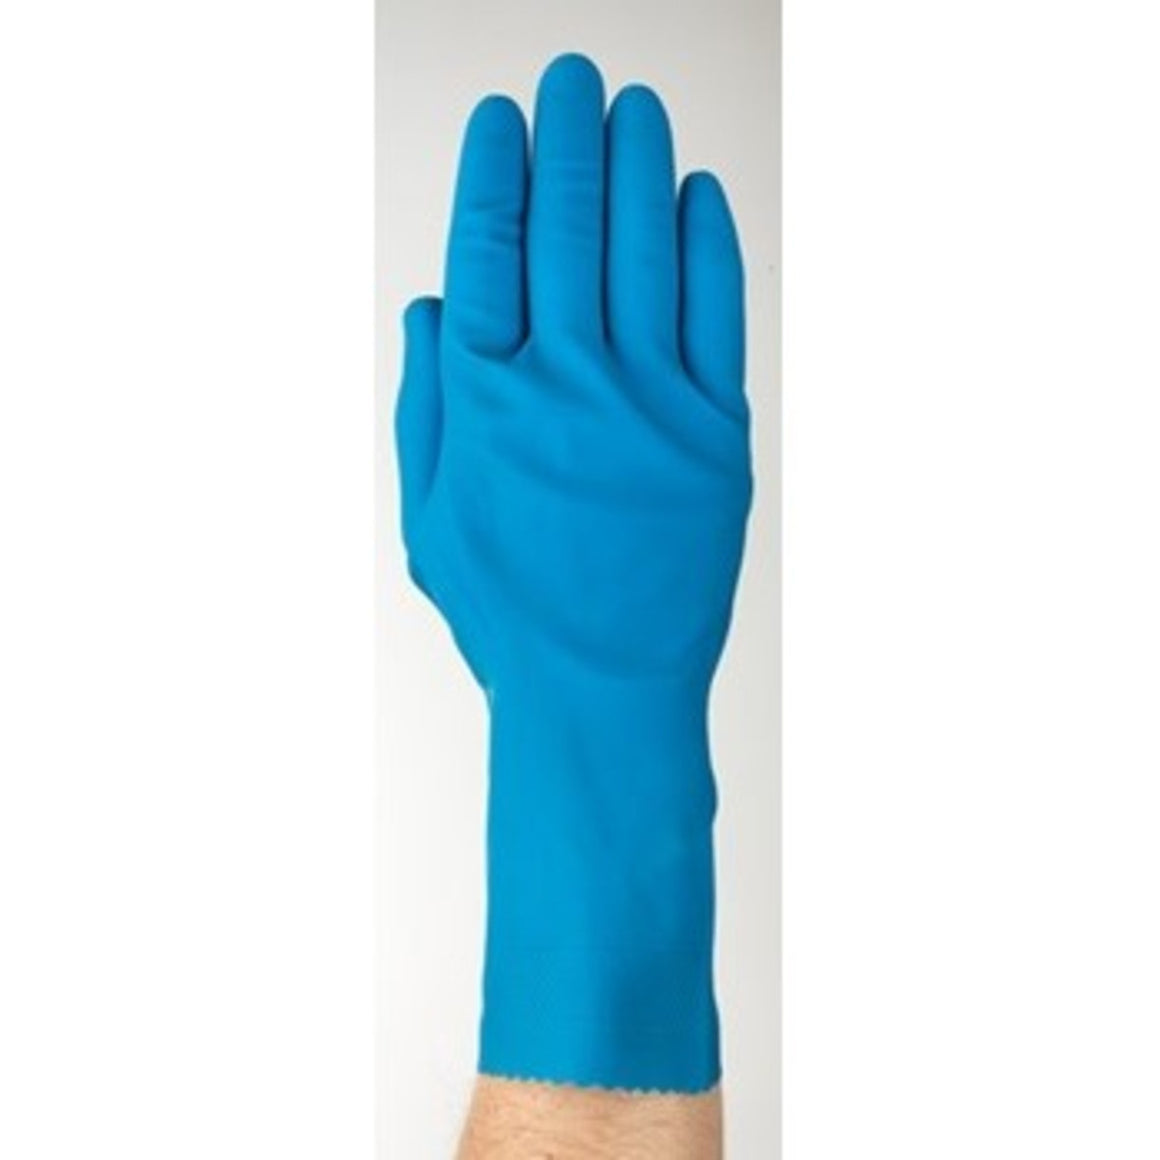 Ansell Fl100 Gloves,185744,Sky Blue,Fishscale Grip,17 Mil,12",Size 10